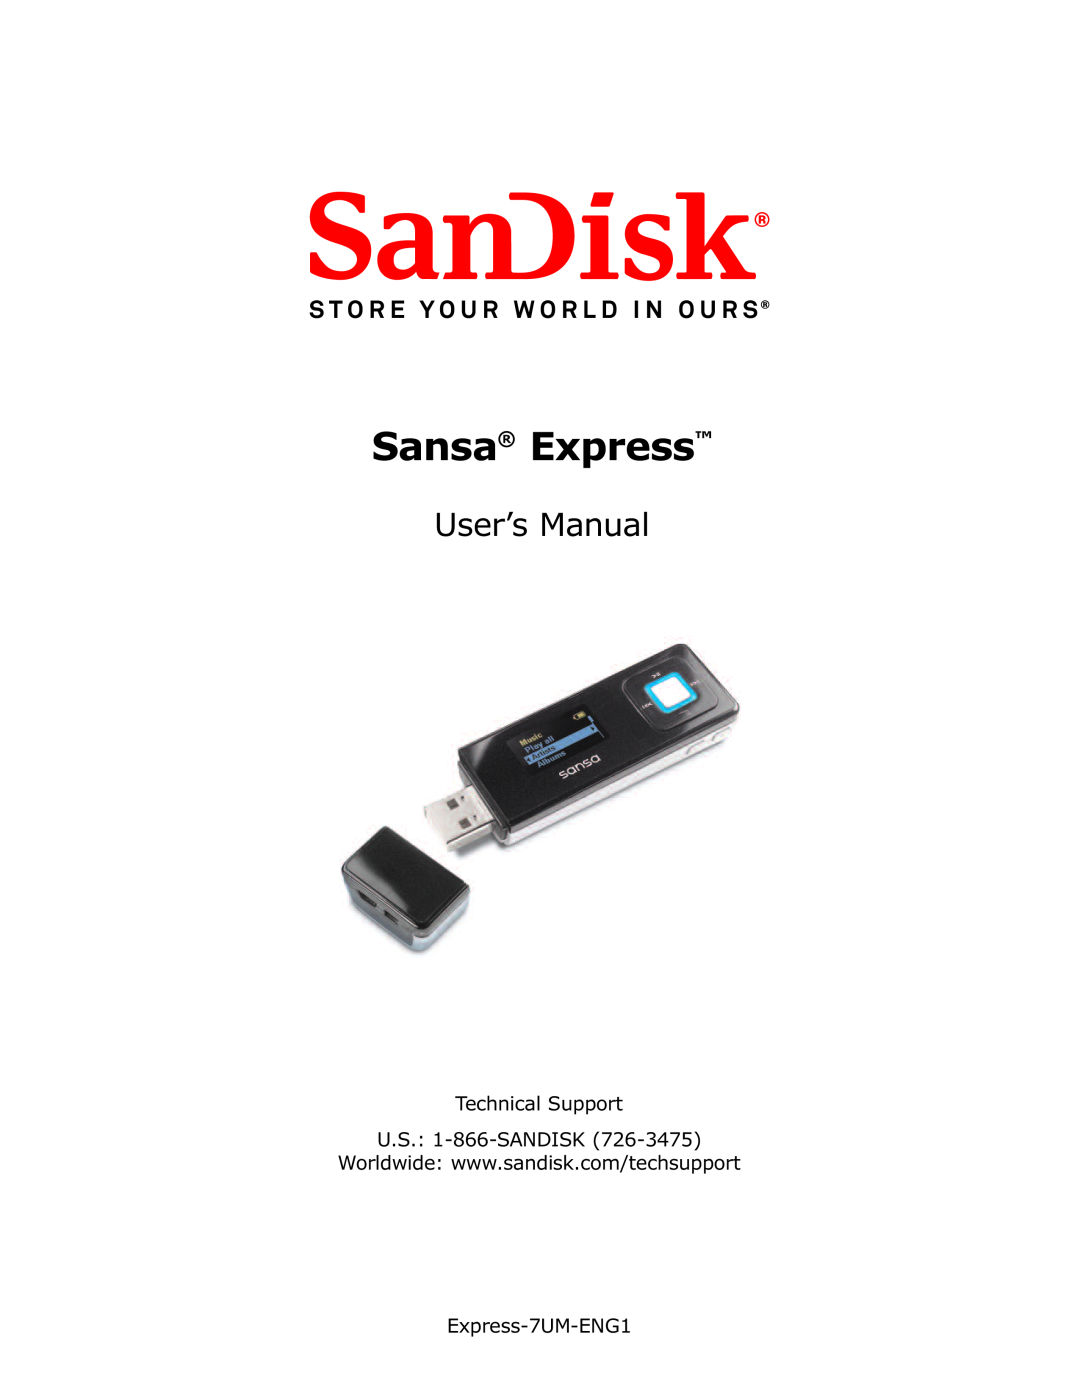 SanDisk c200 user manual User’s Manual, Sansa Express 